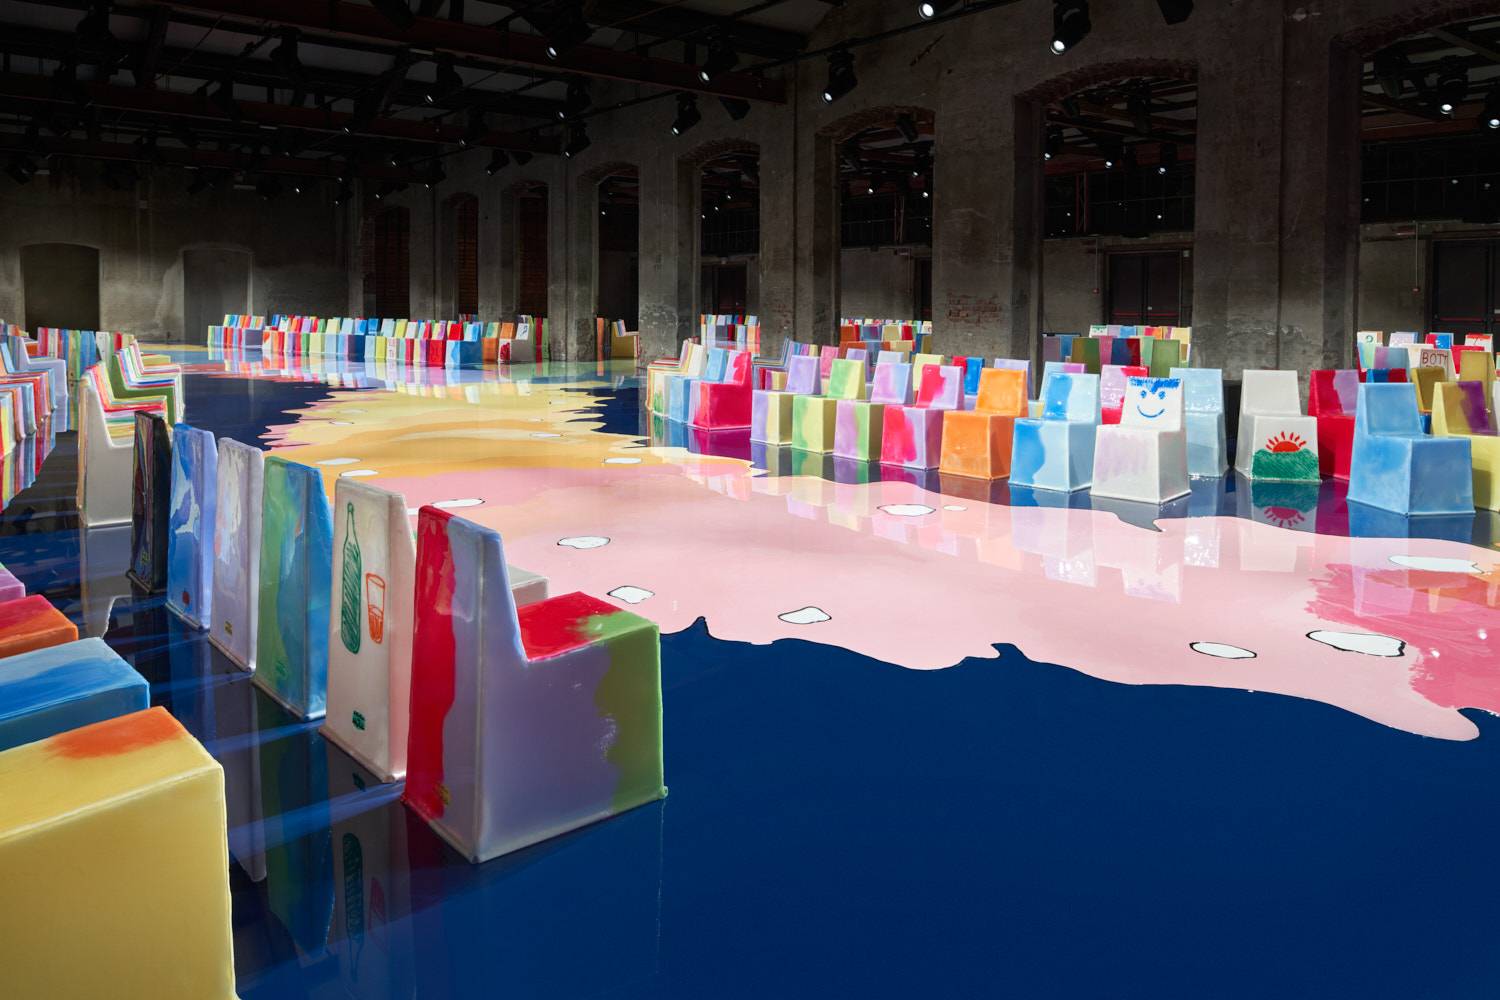 The set of the Bottega Veneta’s Spring/Summer 2023 show designed by Gaetano Pesce.